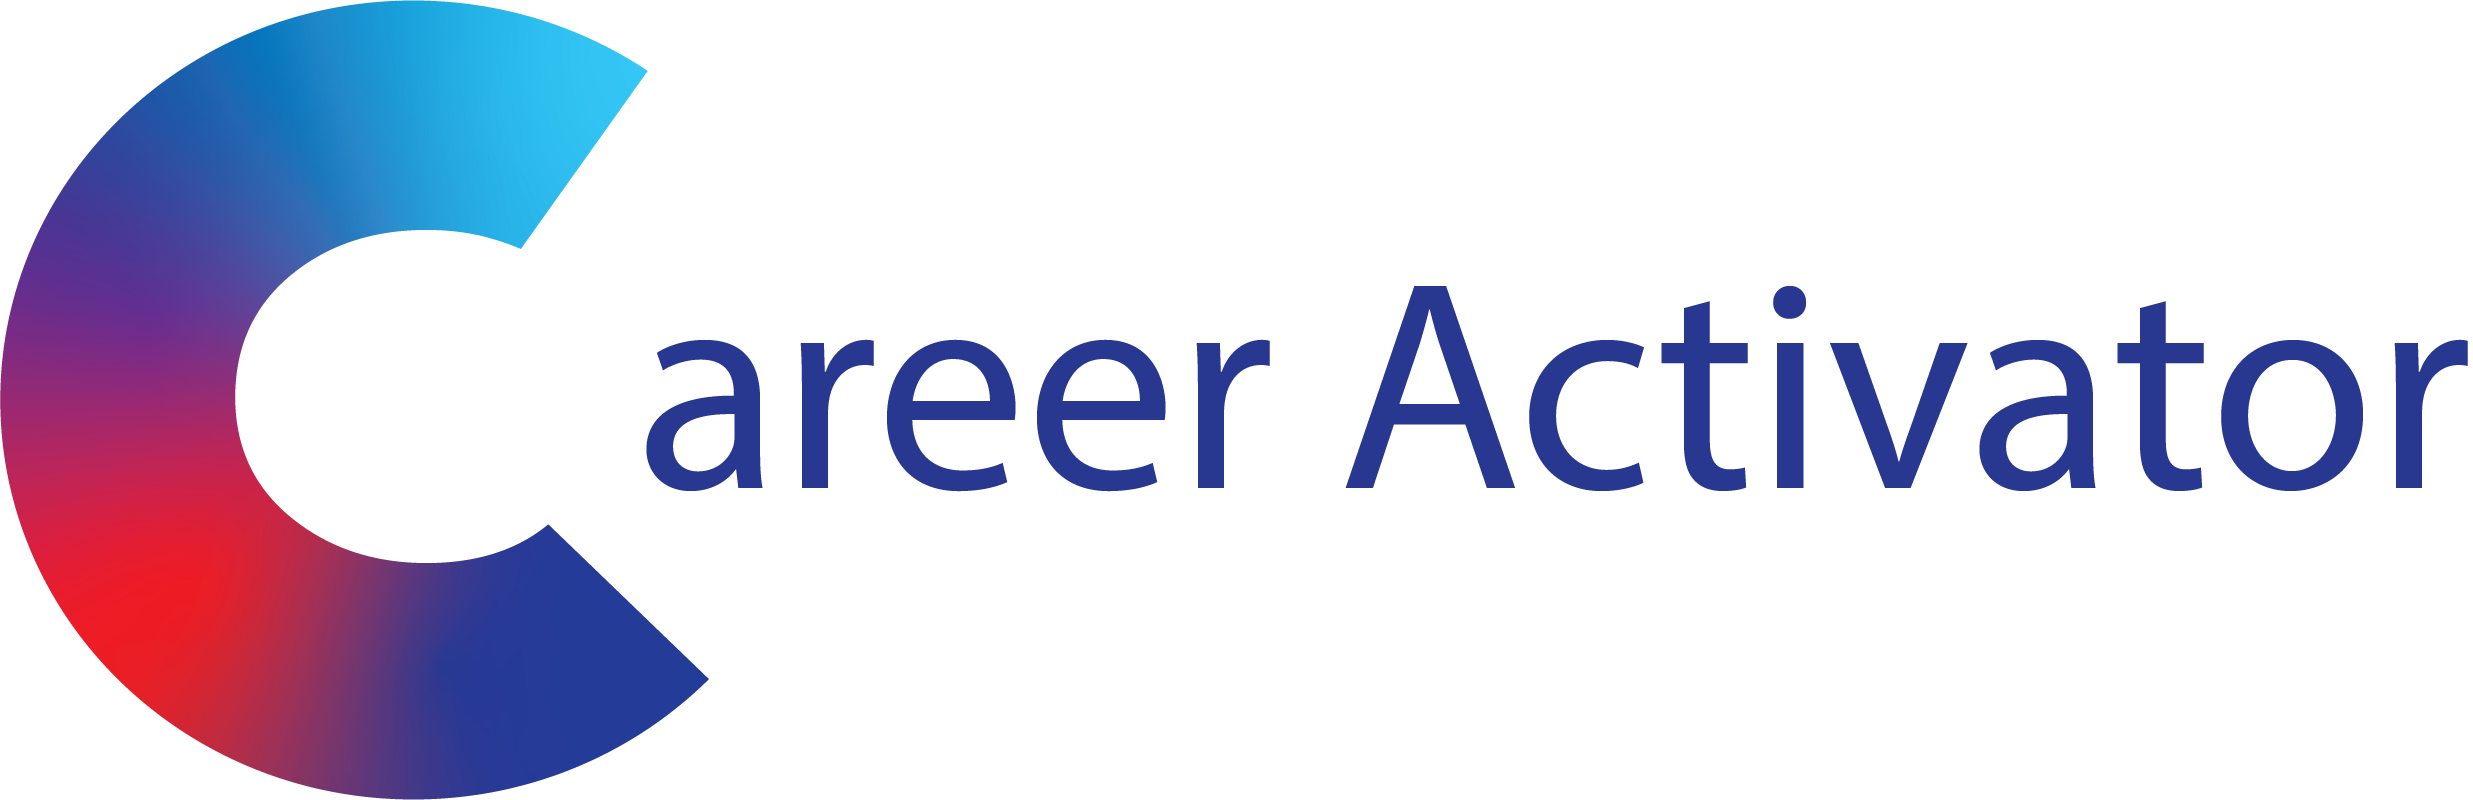 Career Activator logo